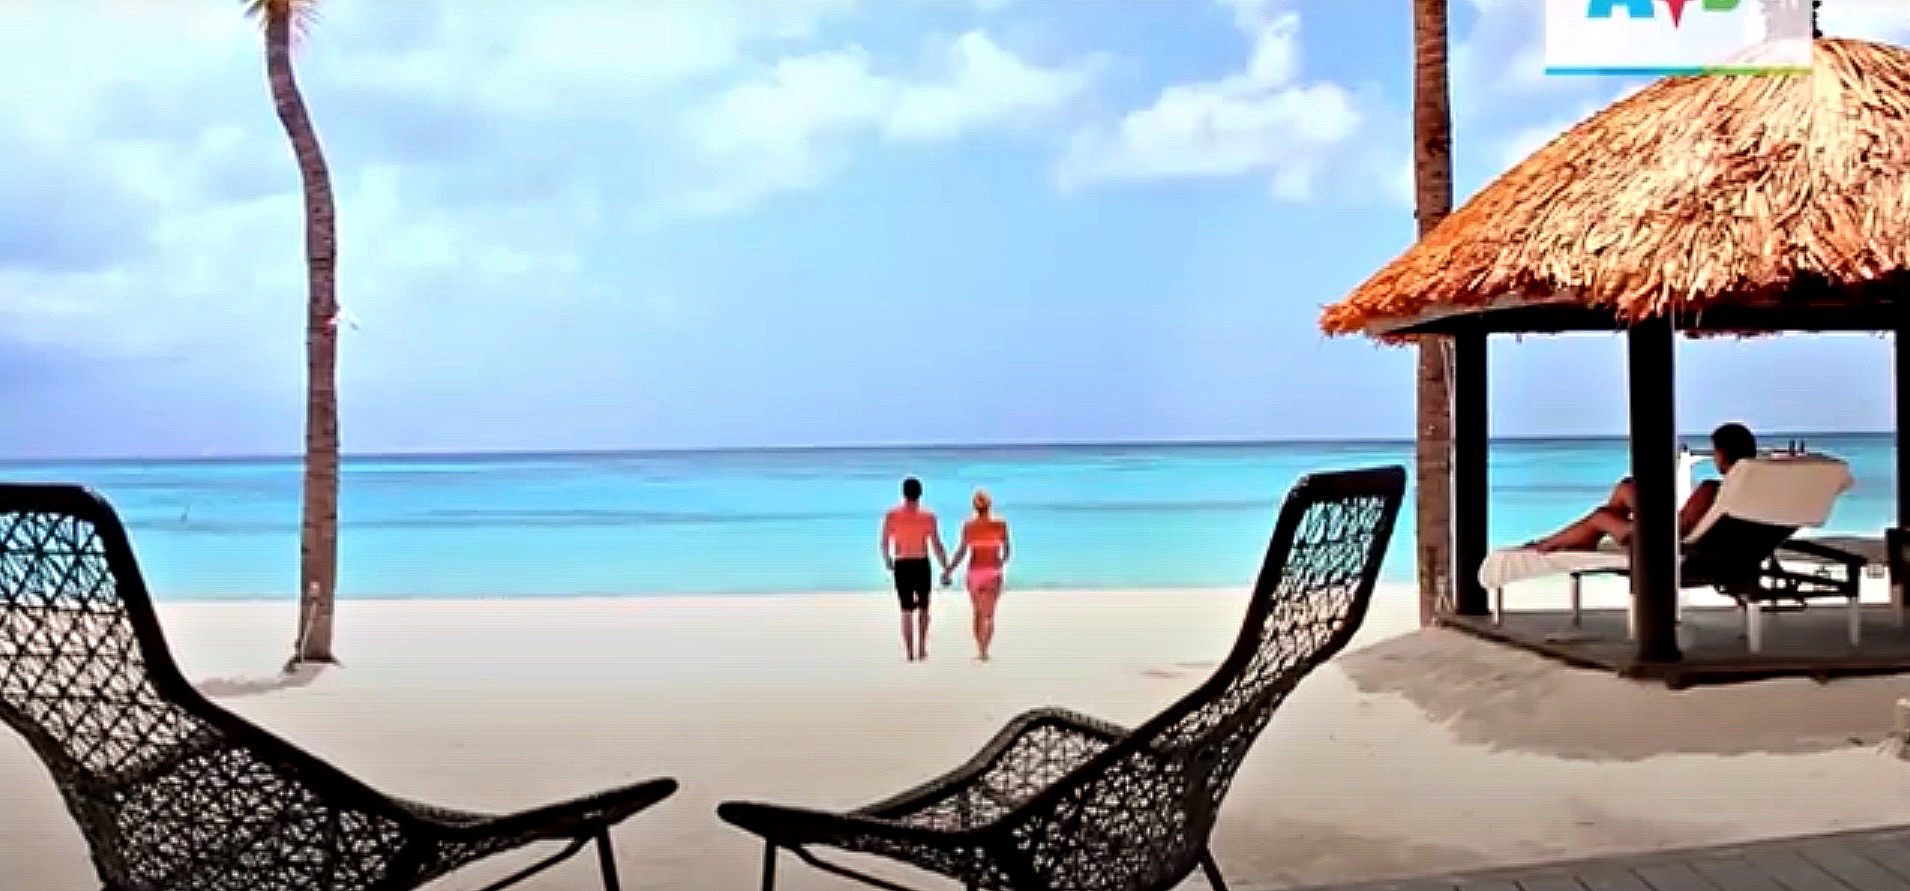 Best Aruba Beaches romantic couple